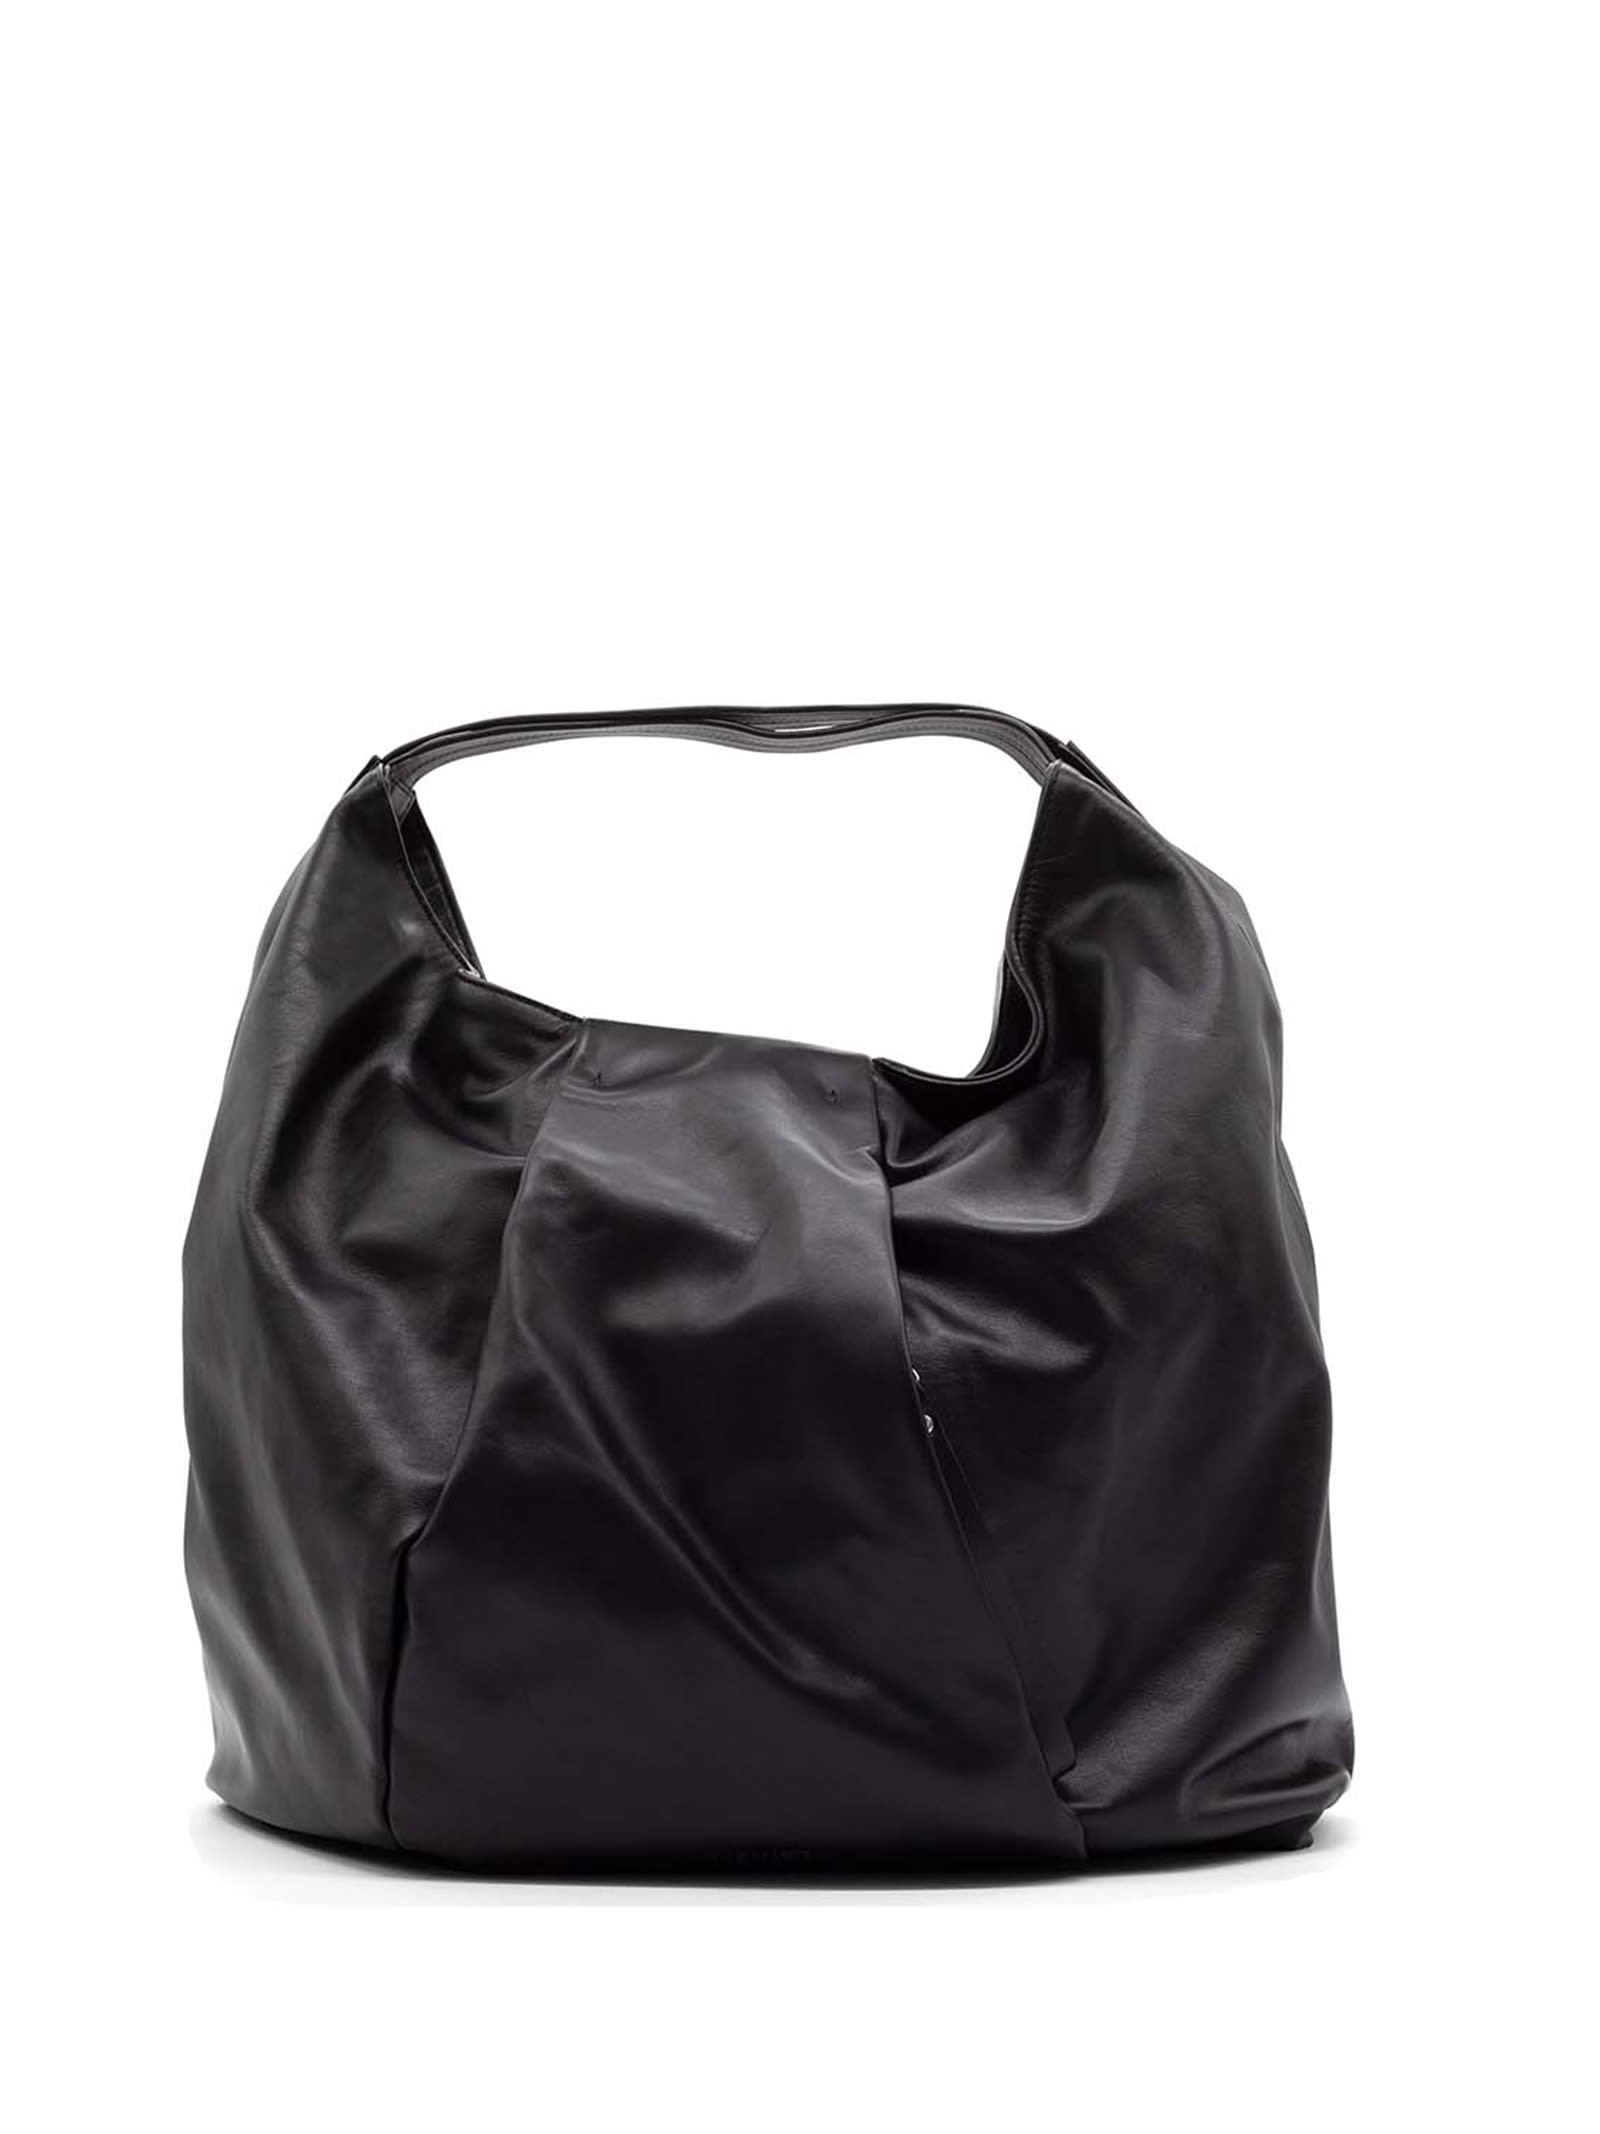 Vic Matié Black Leather Shoulder Bag